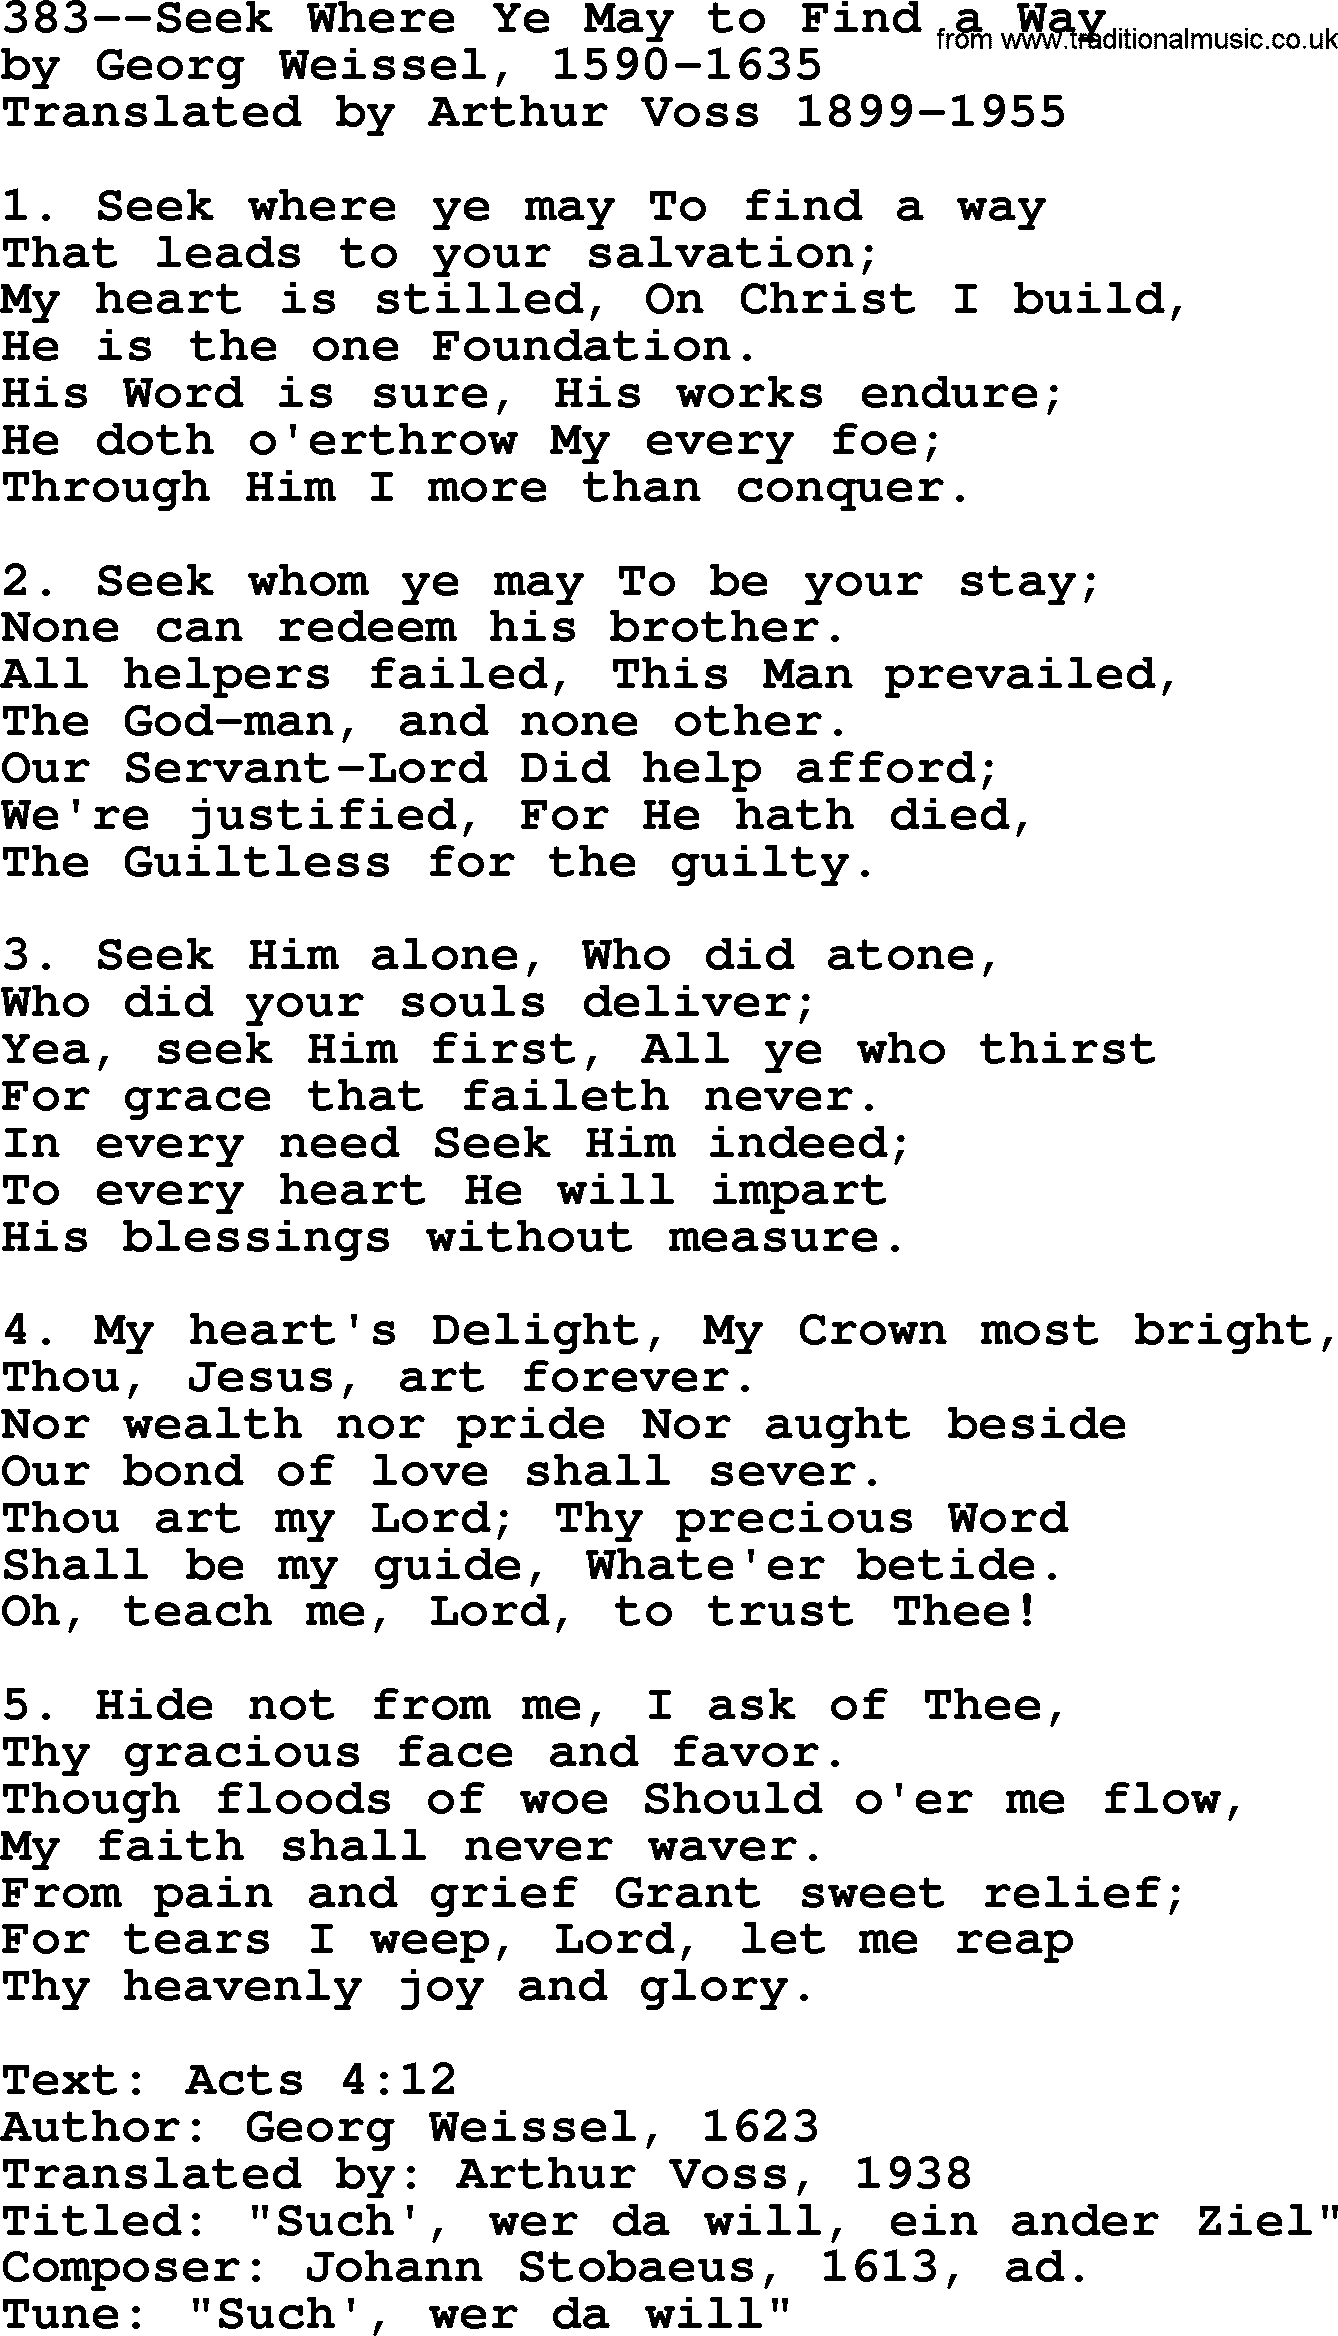 Lutheran Hymn: 383--Seek Where Ye May to Find a Way.txt lyrics with PDF